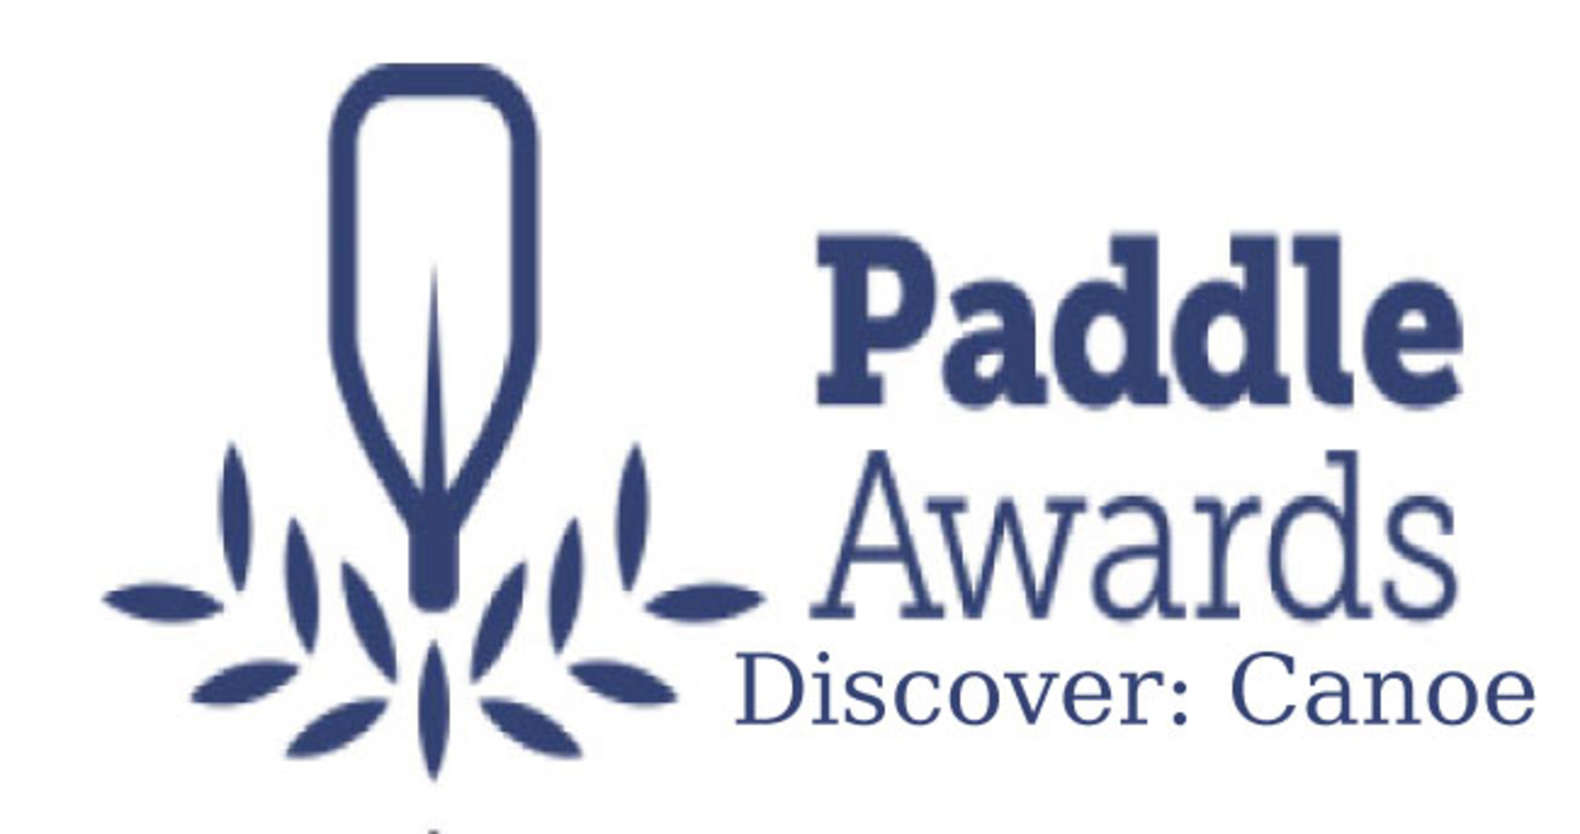 Discover Award: Canoe